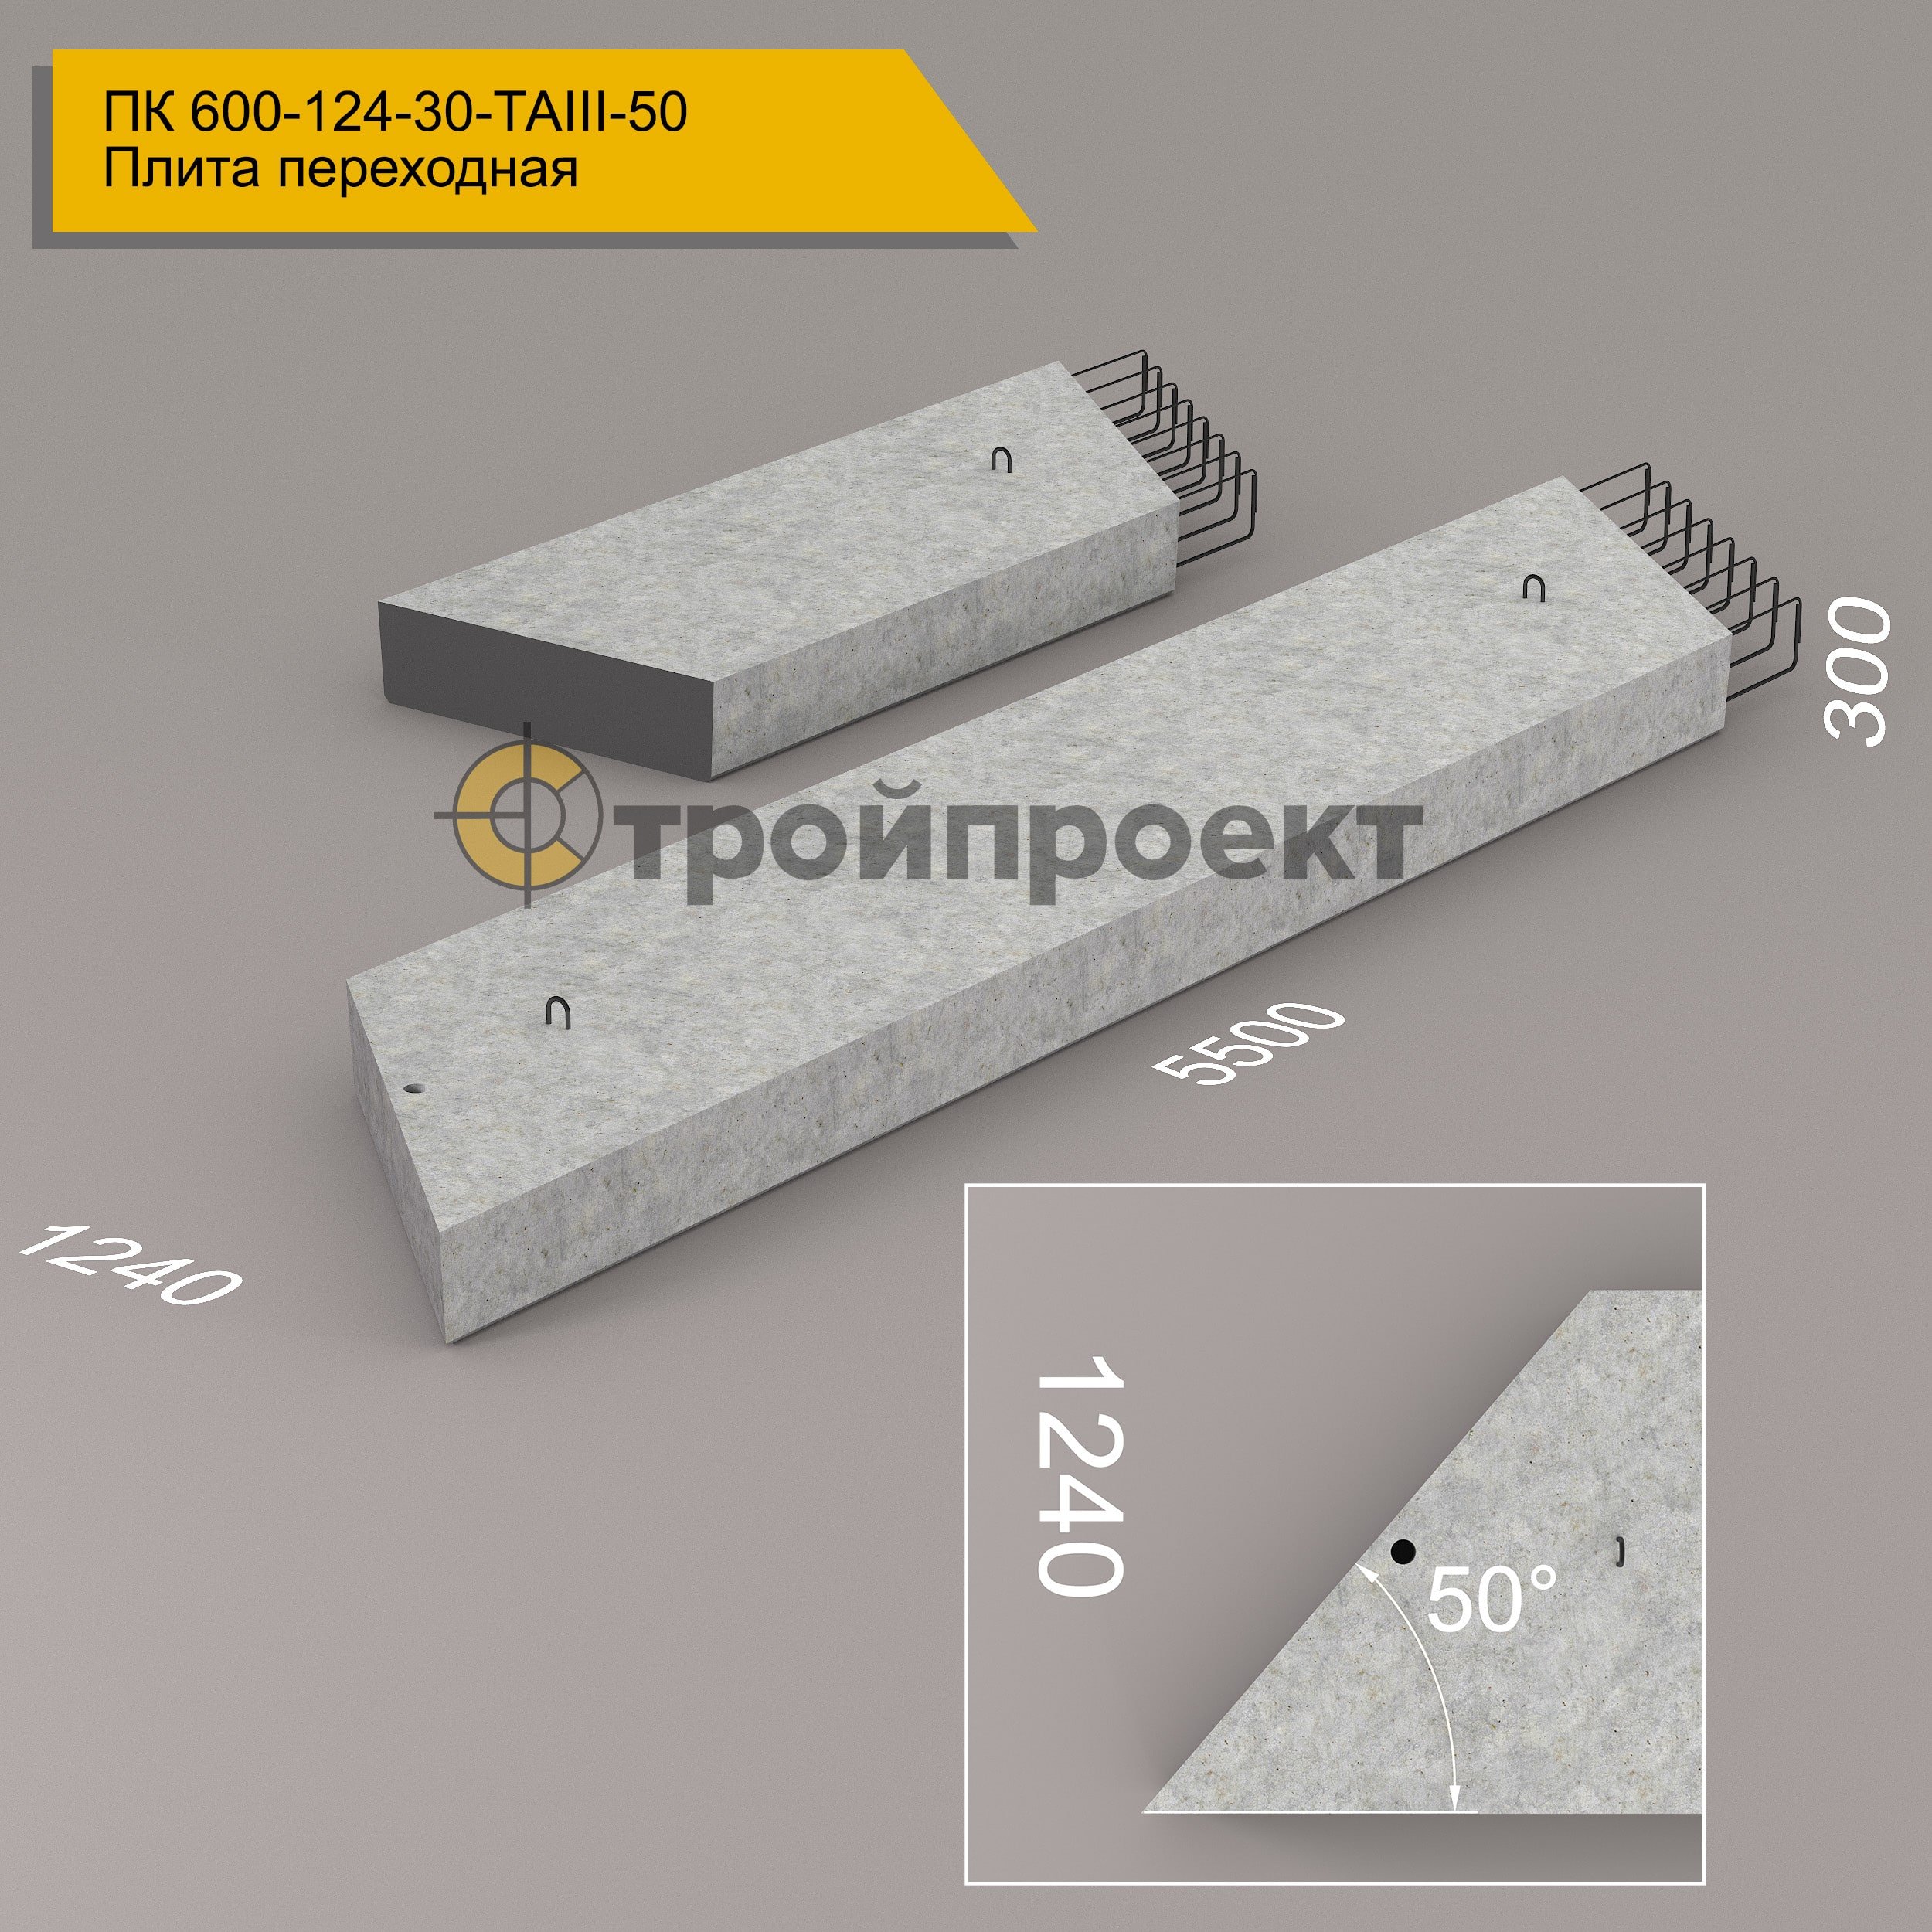 Плита переходная ПК 600-124-30-ТАIII-50